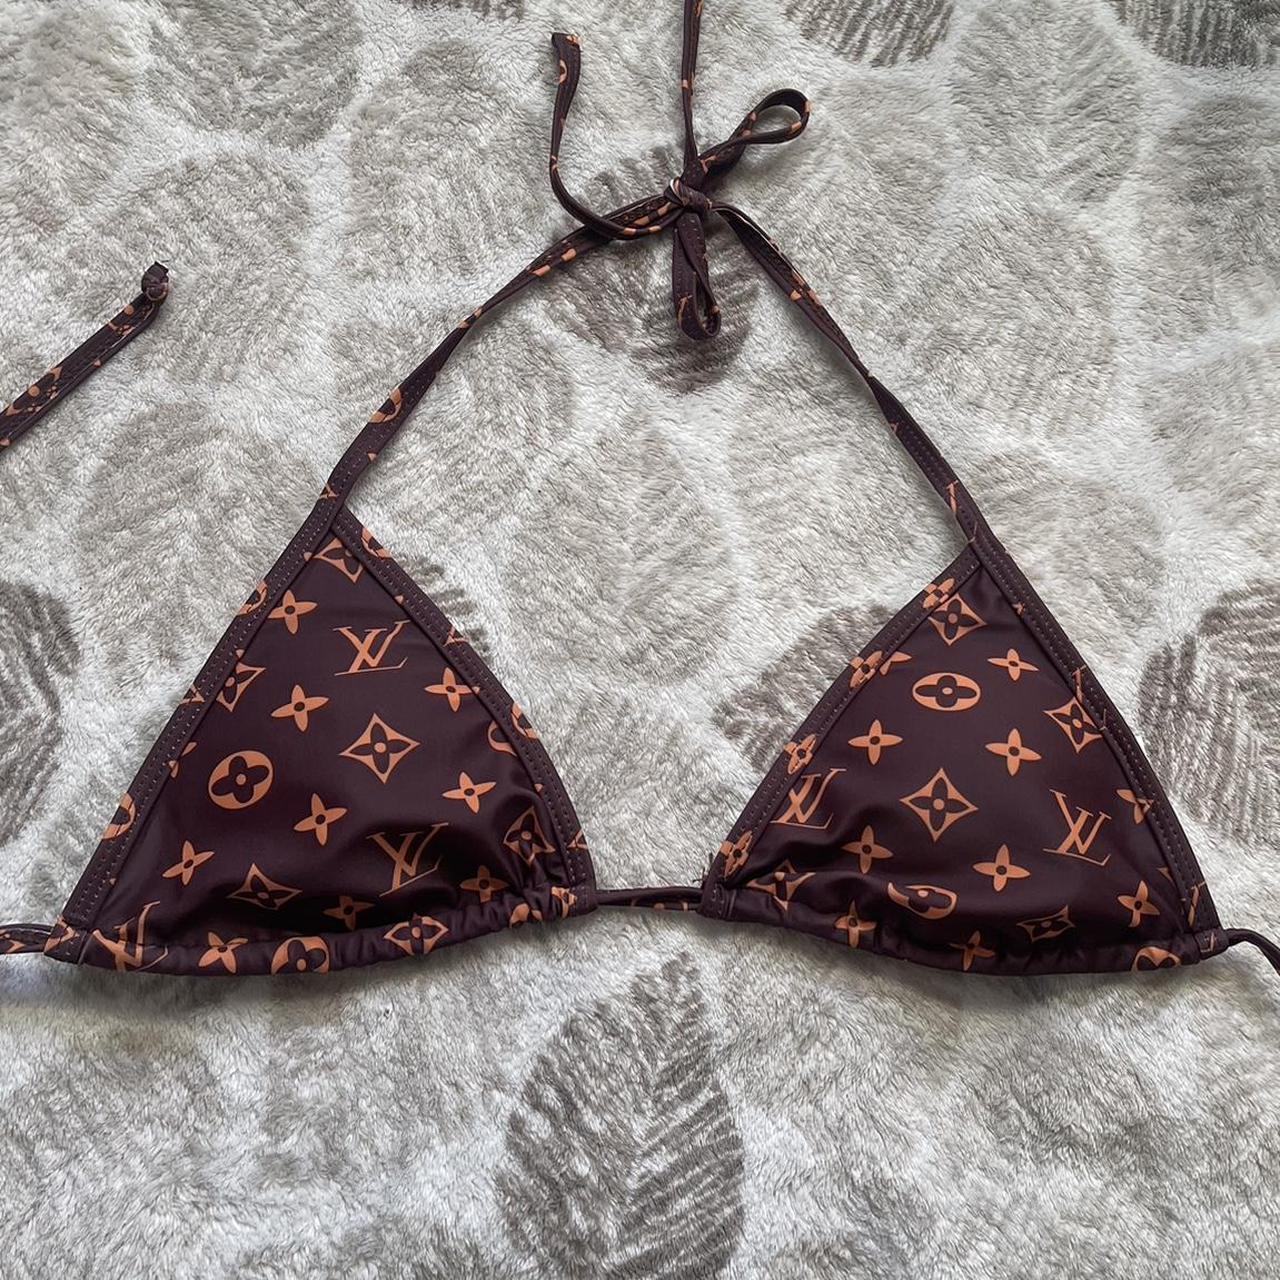 Louis Vuitton Thong Bikini. Super cute only worn a - Depop